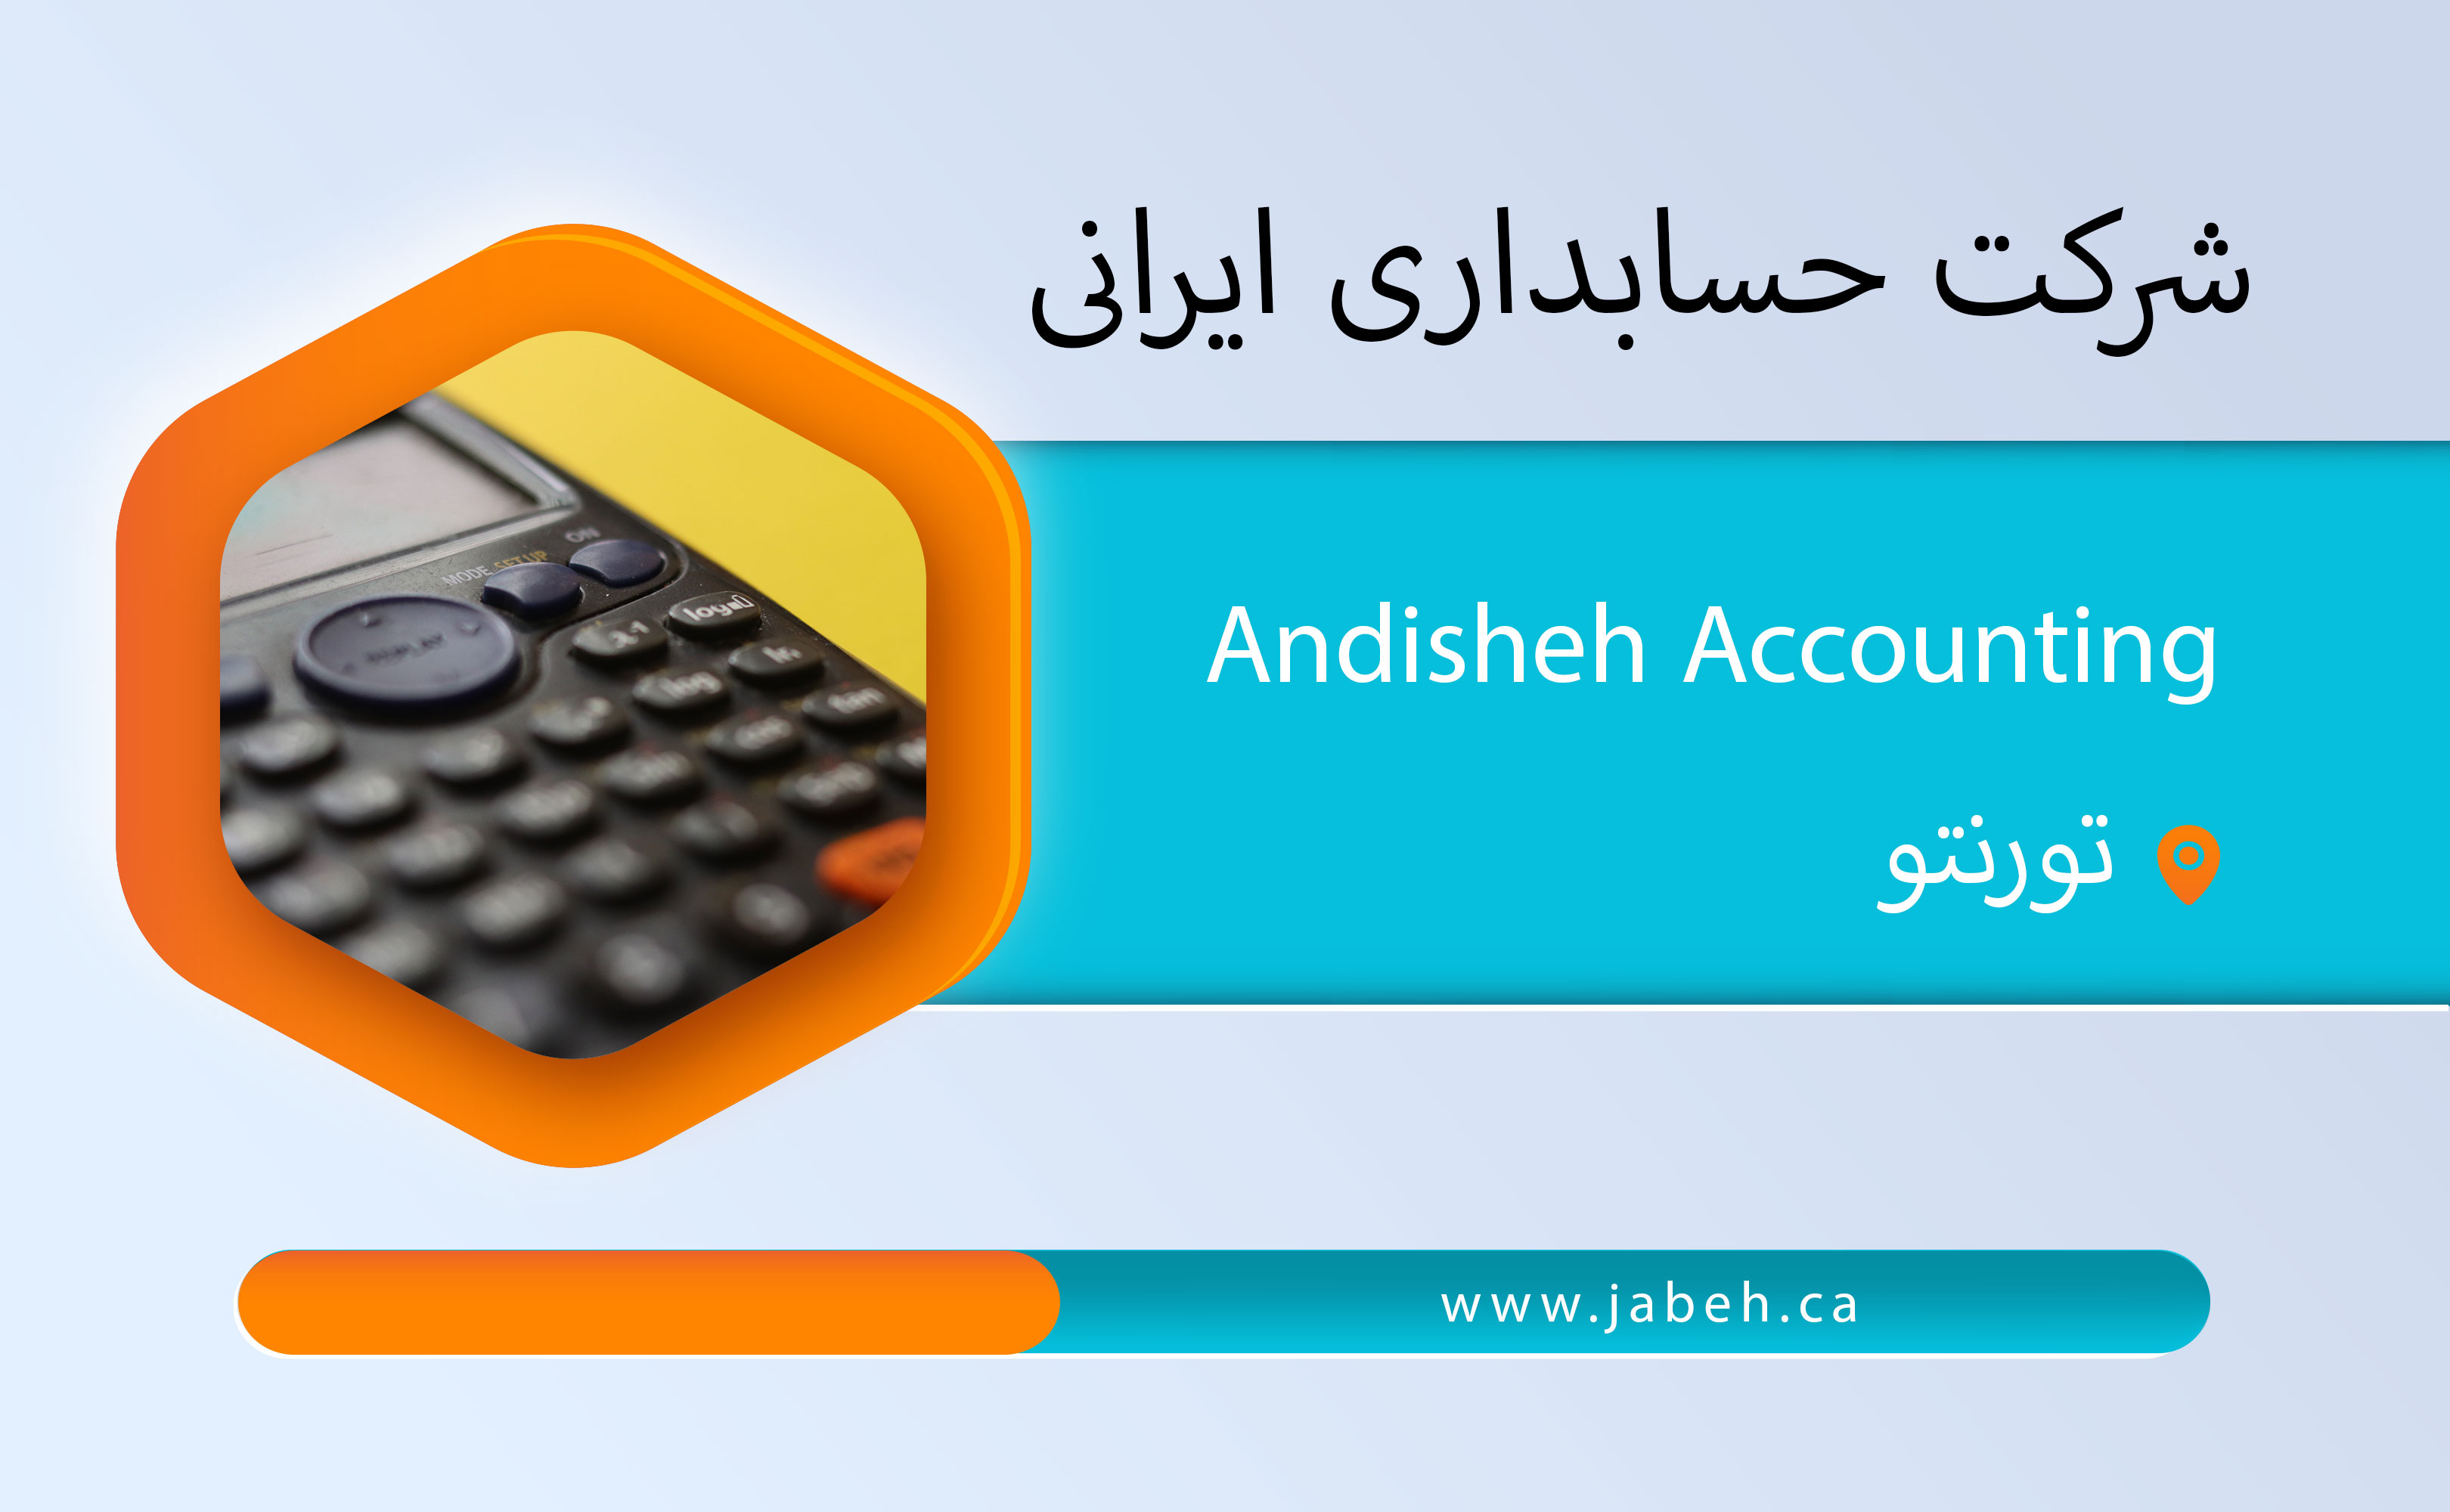 Iranian accounting company Andisheh Accounting in Toronto